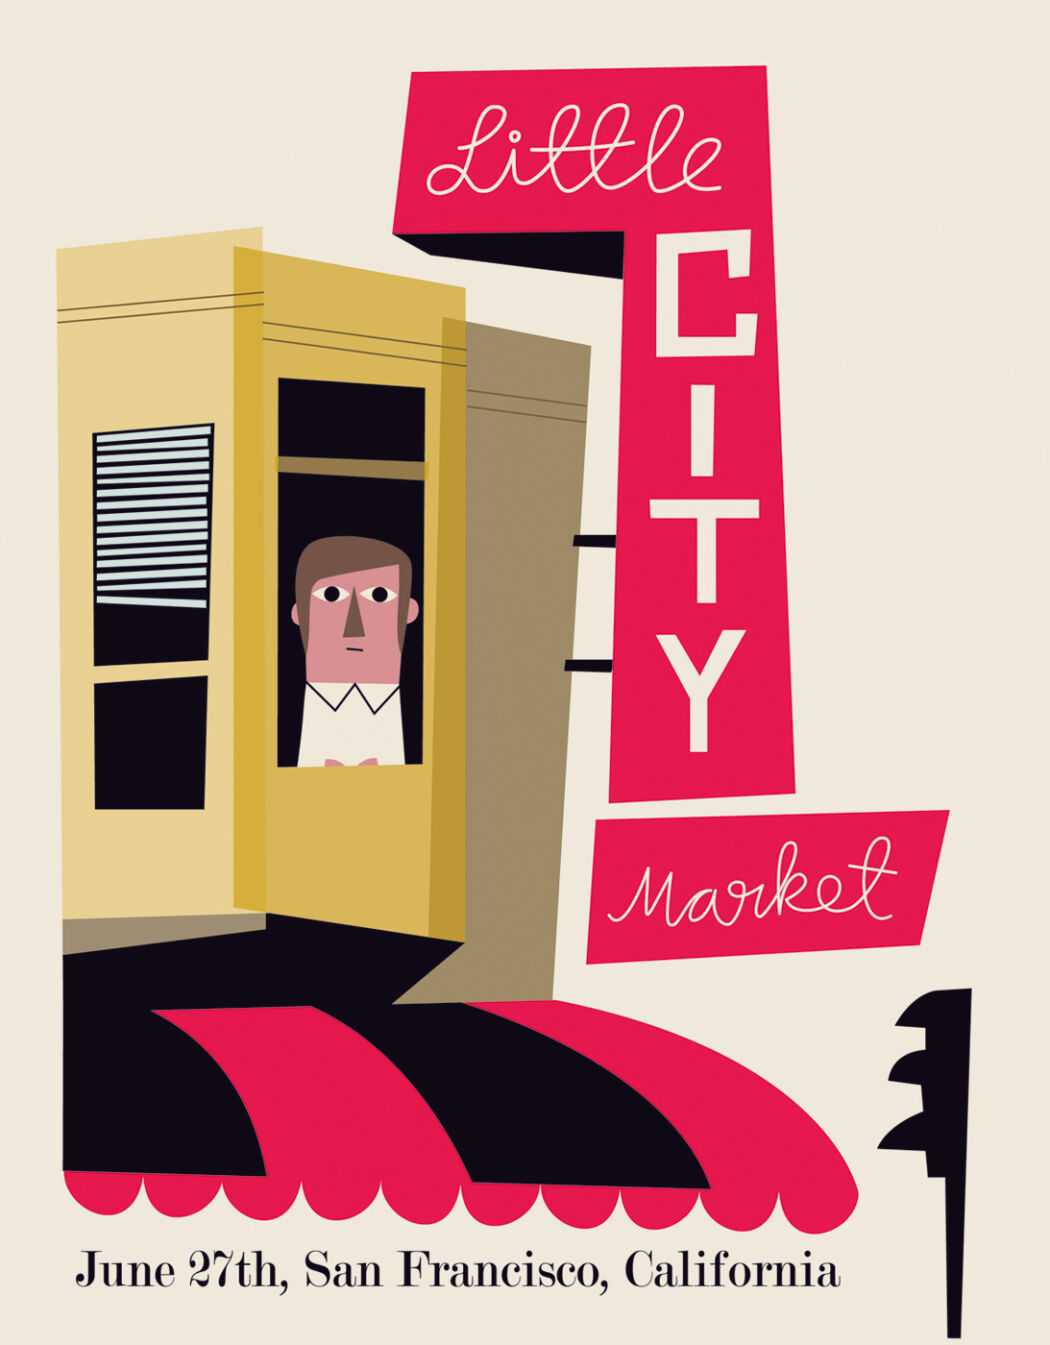 City poster, San Francisco illustrated by award winning illustrator and artist Ingela P Arrhenius